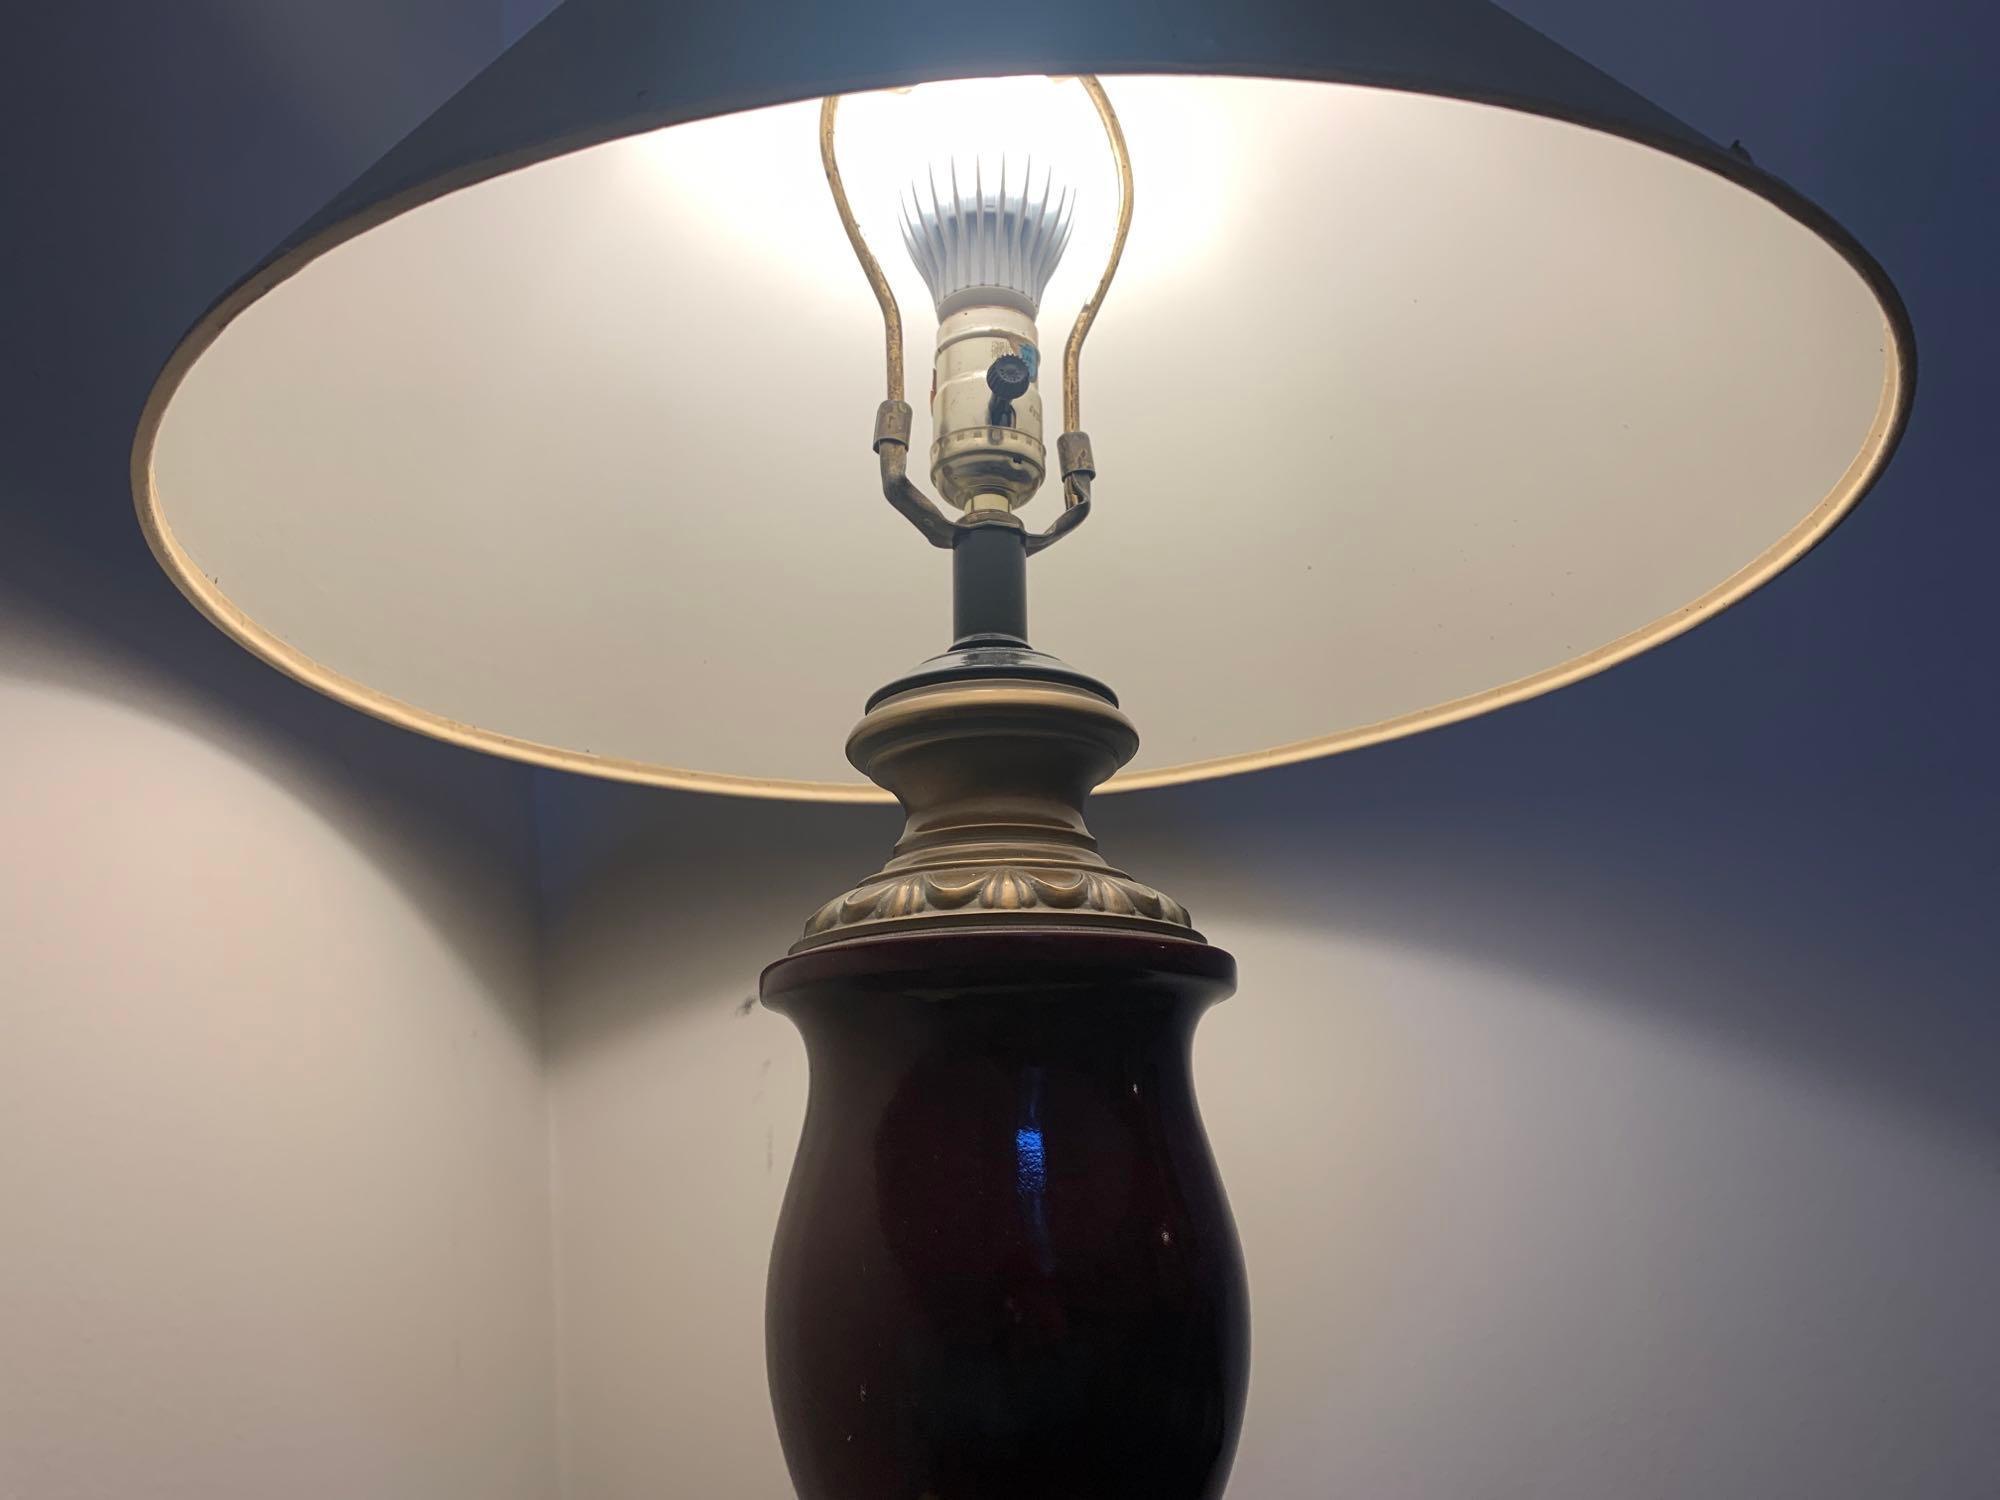 Corner Table - Electric Lamp